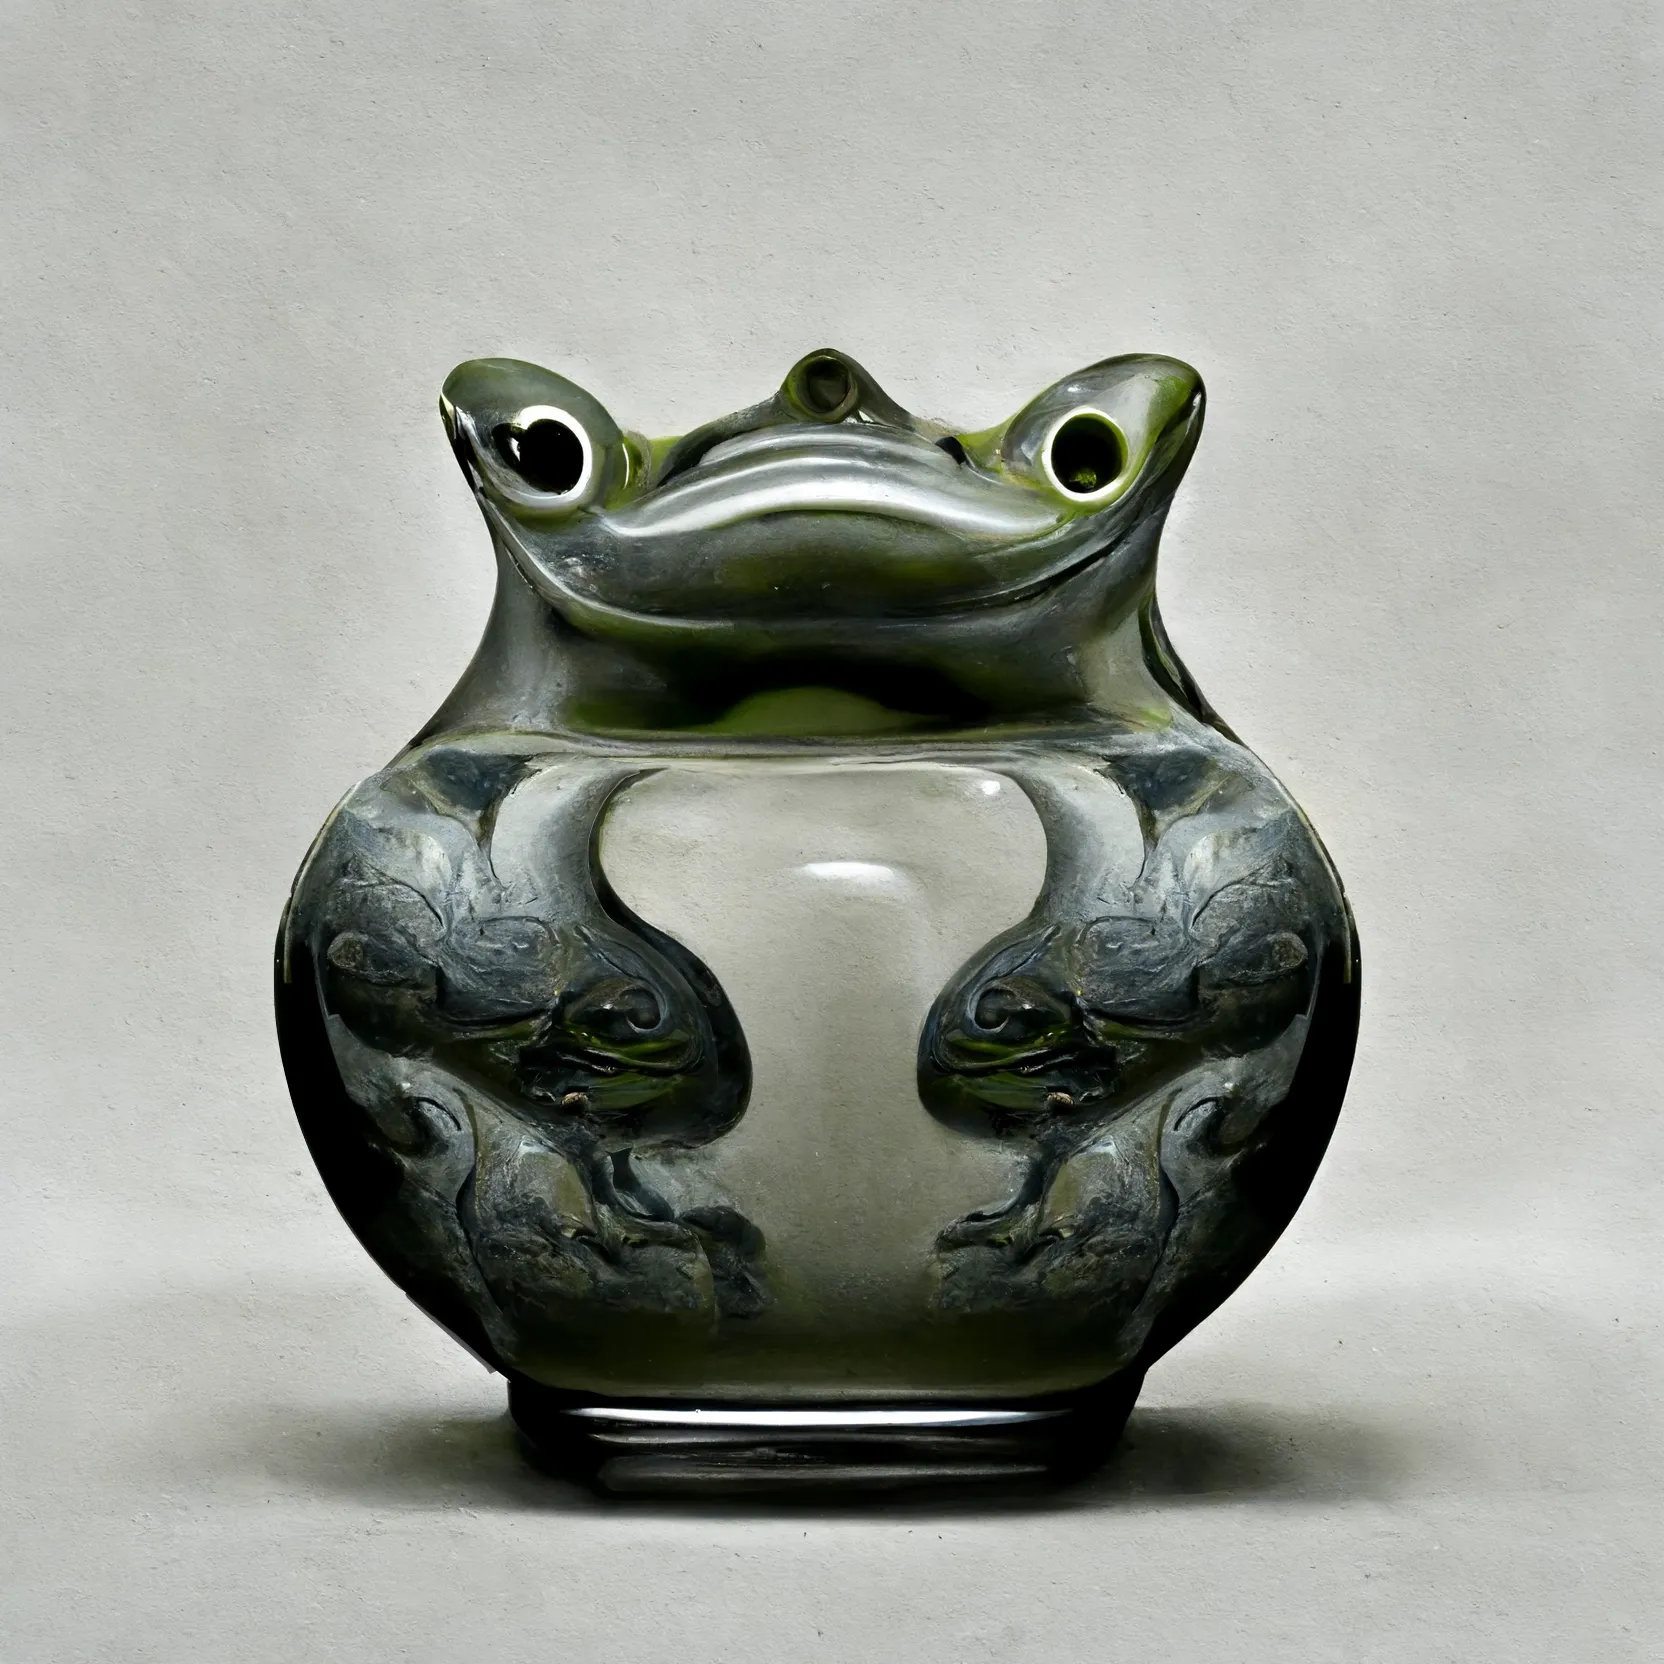 Unknown workshop | Fú Vase | Tang dynasty (618-907 AD) | Porcelain with white underglaze and jade green overglaze enamel.